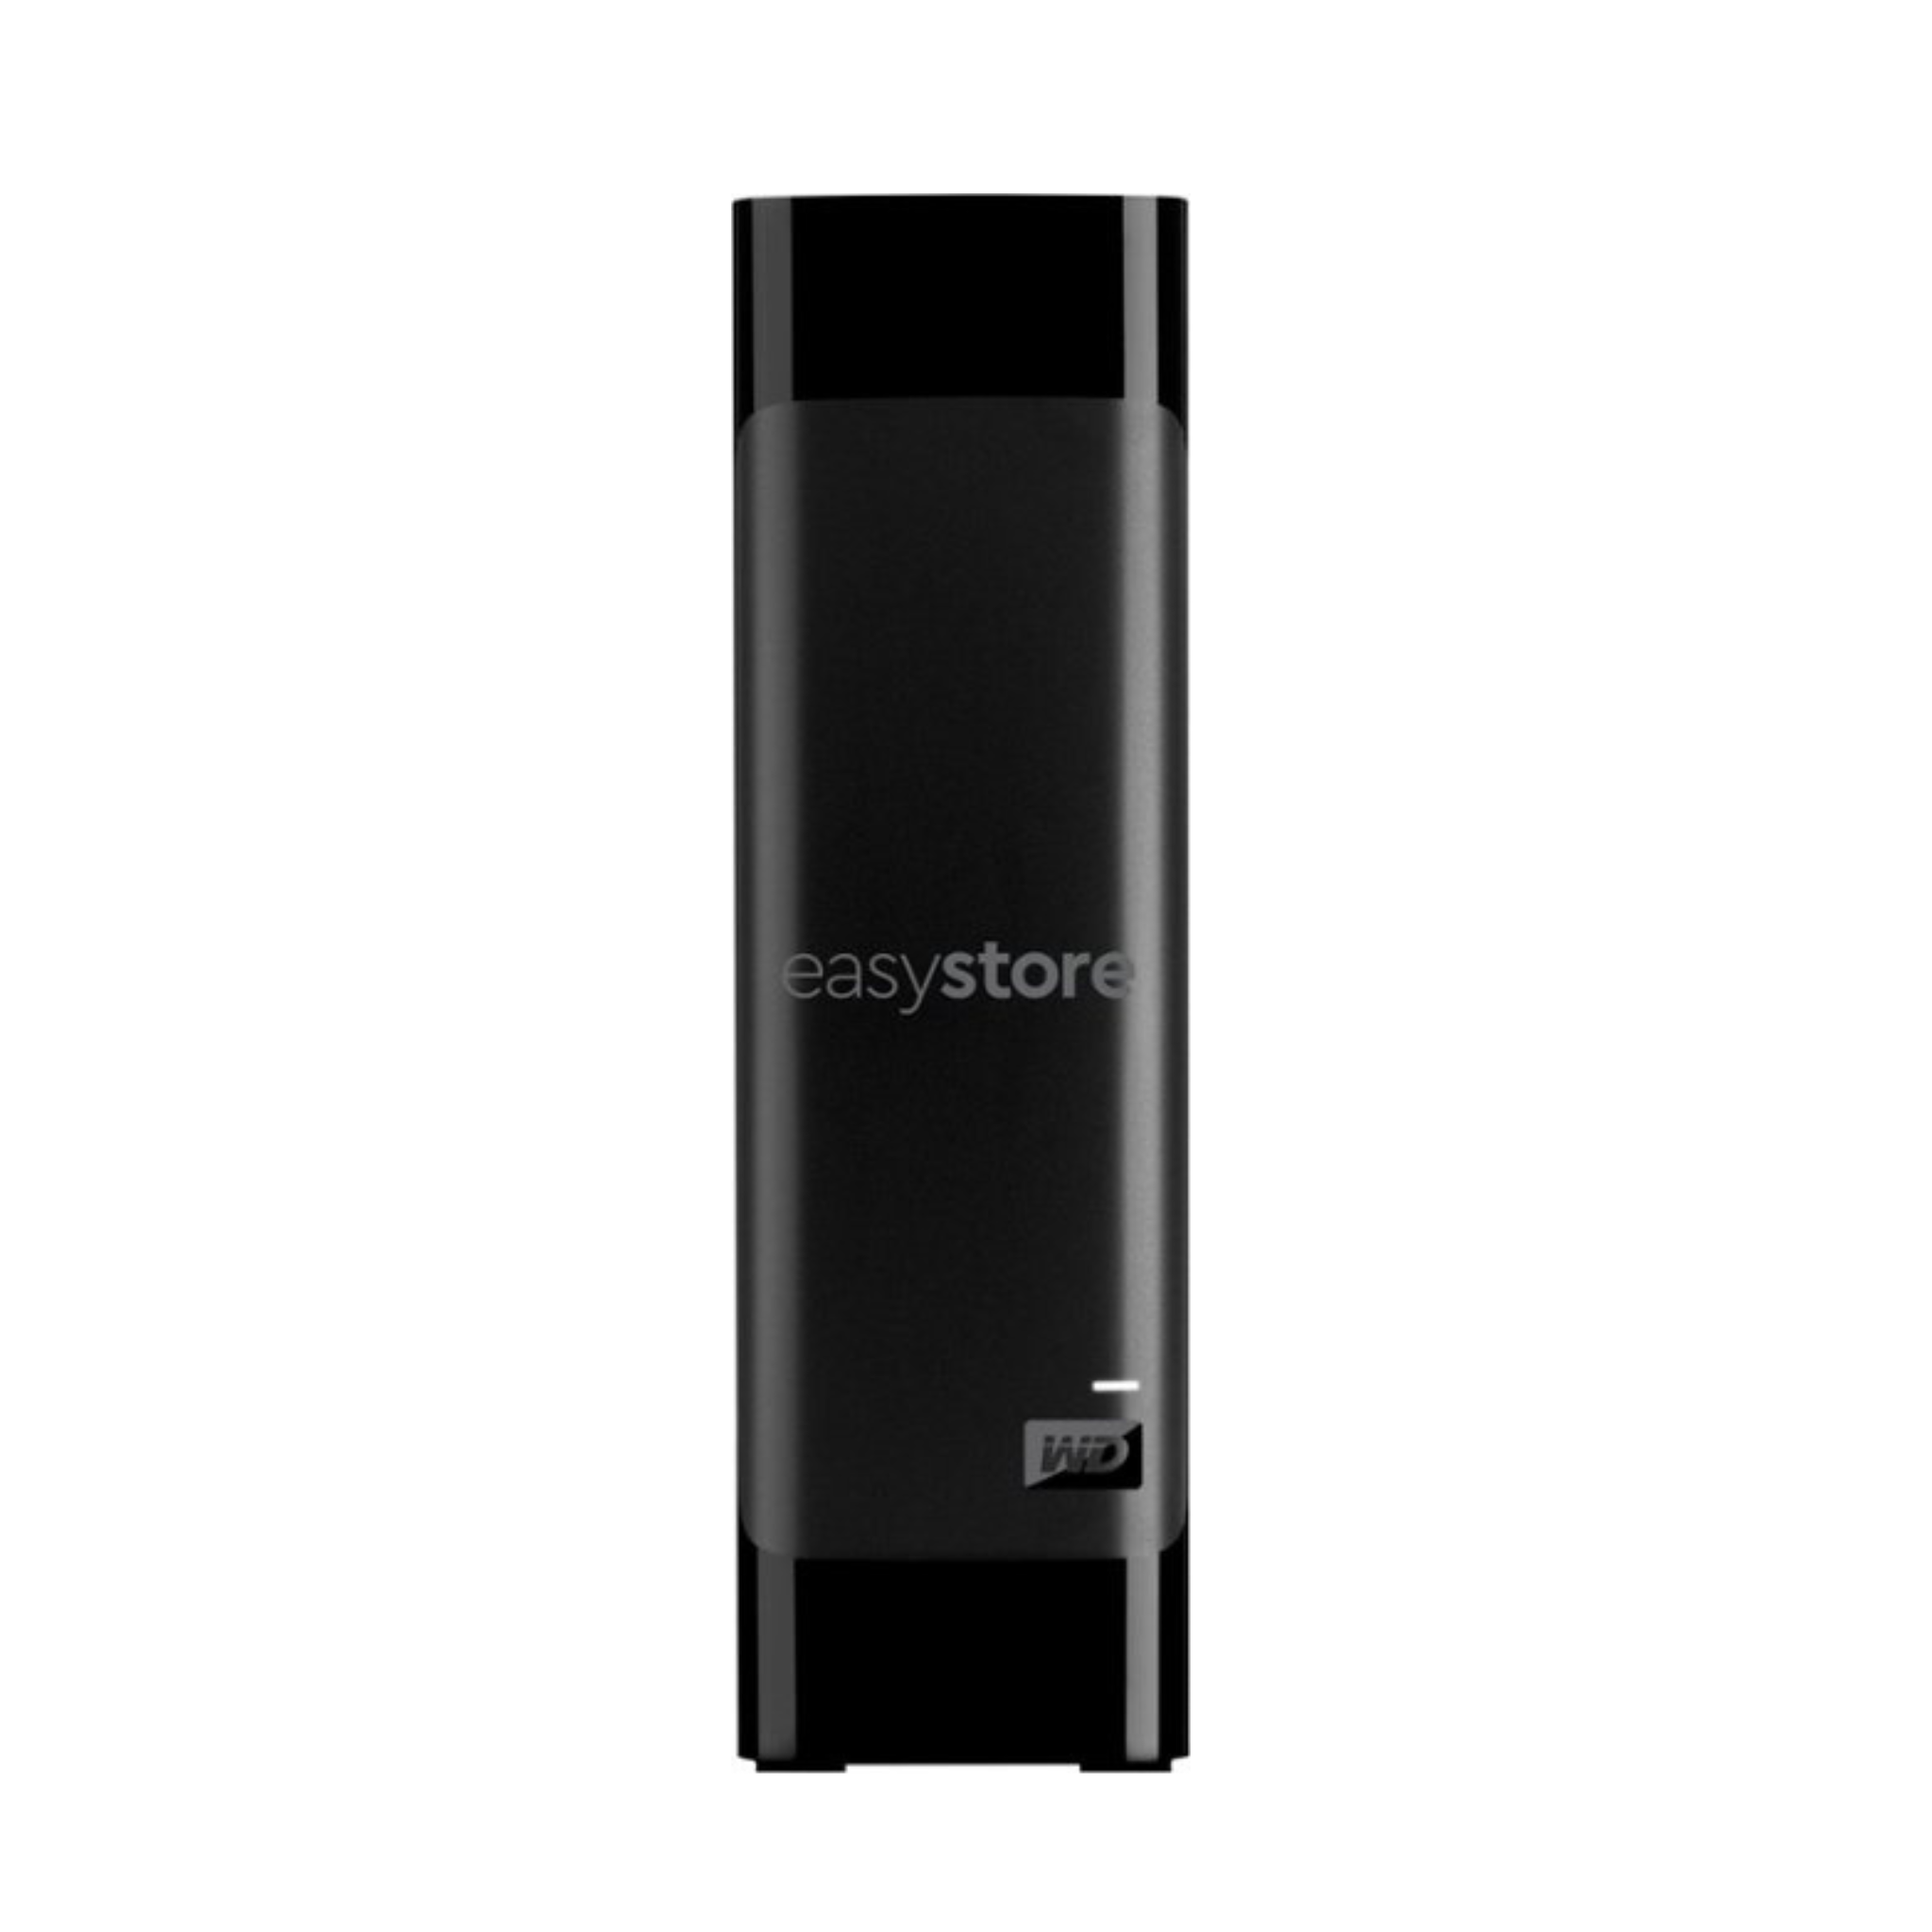 WD Easystore 18TB External USB 3.0 Hard Drive